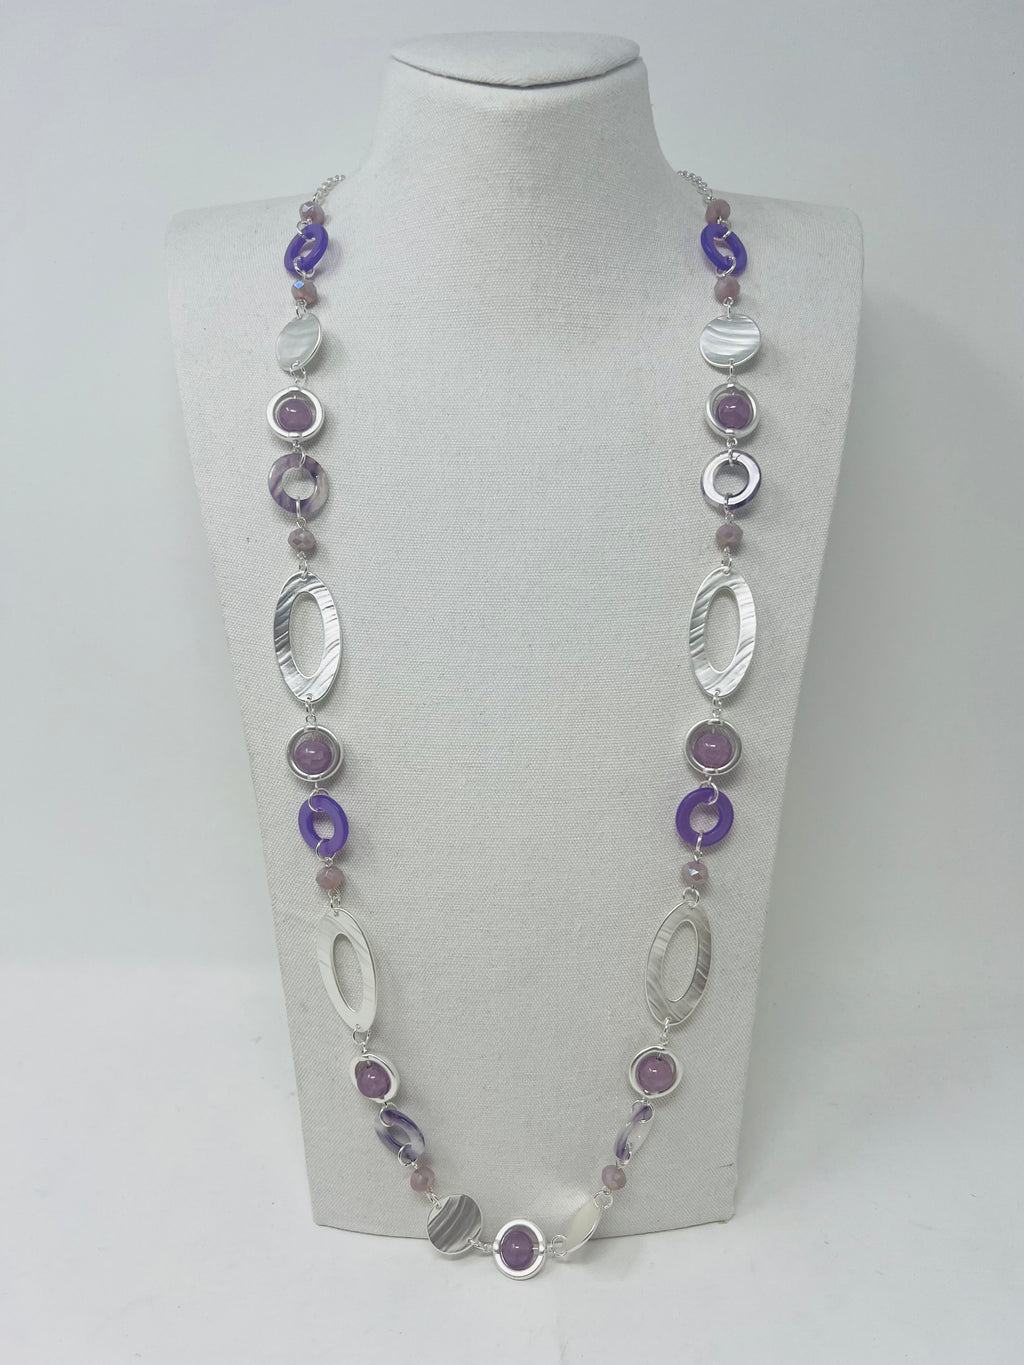 Long chain necklace (6 colors)